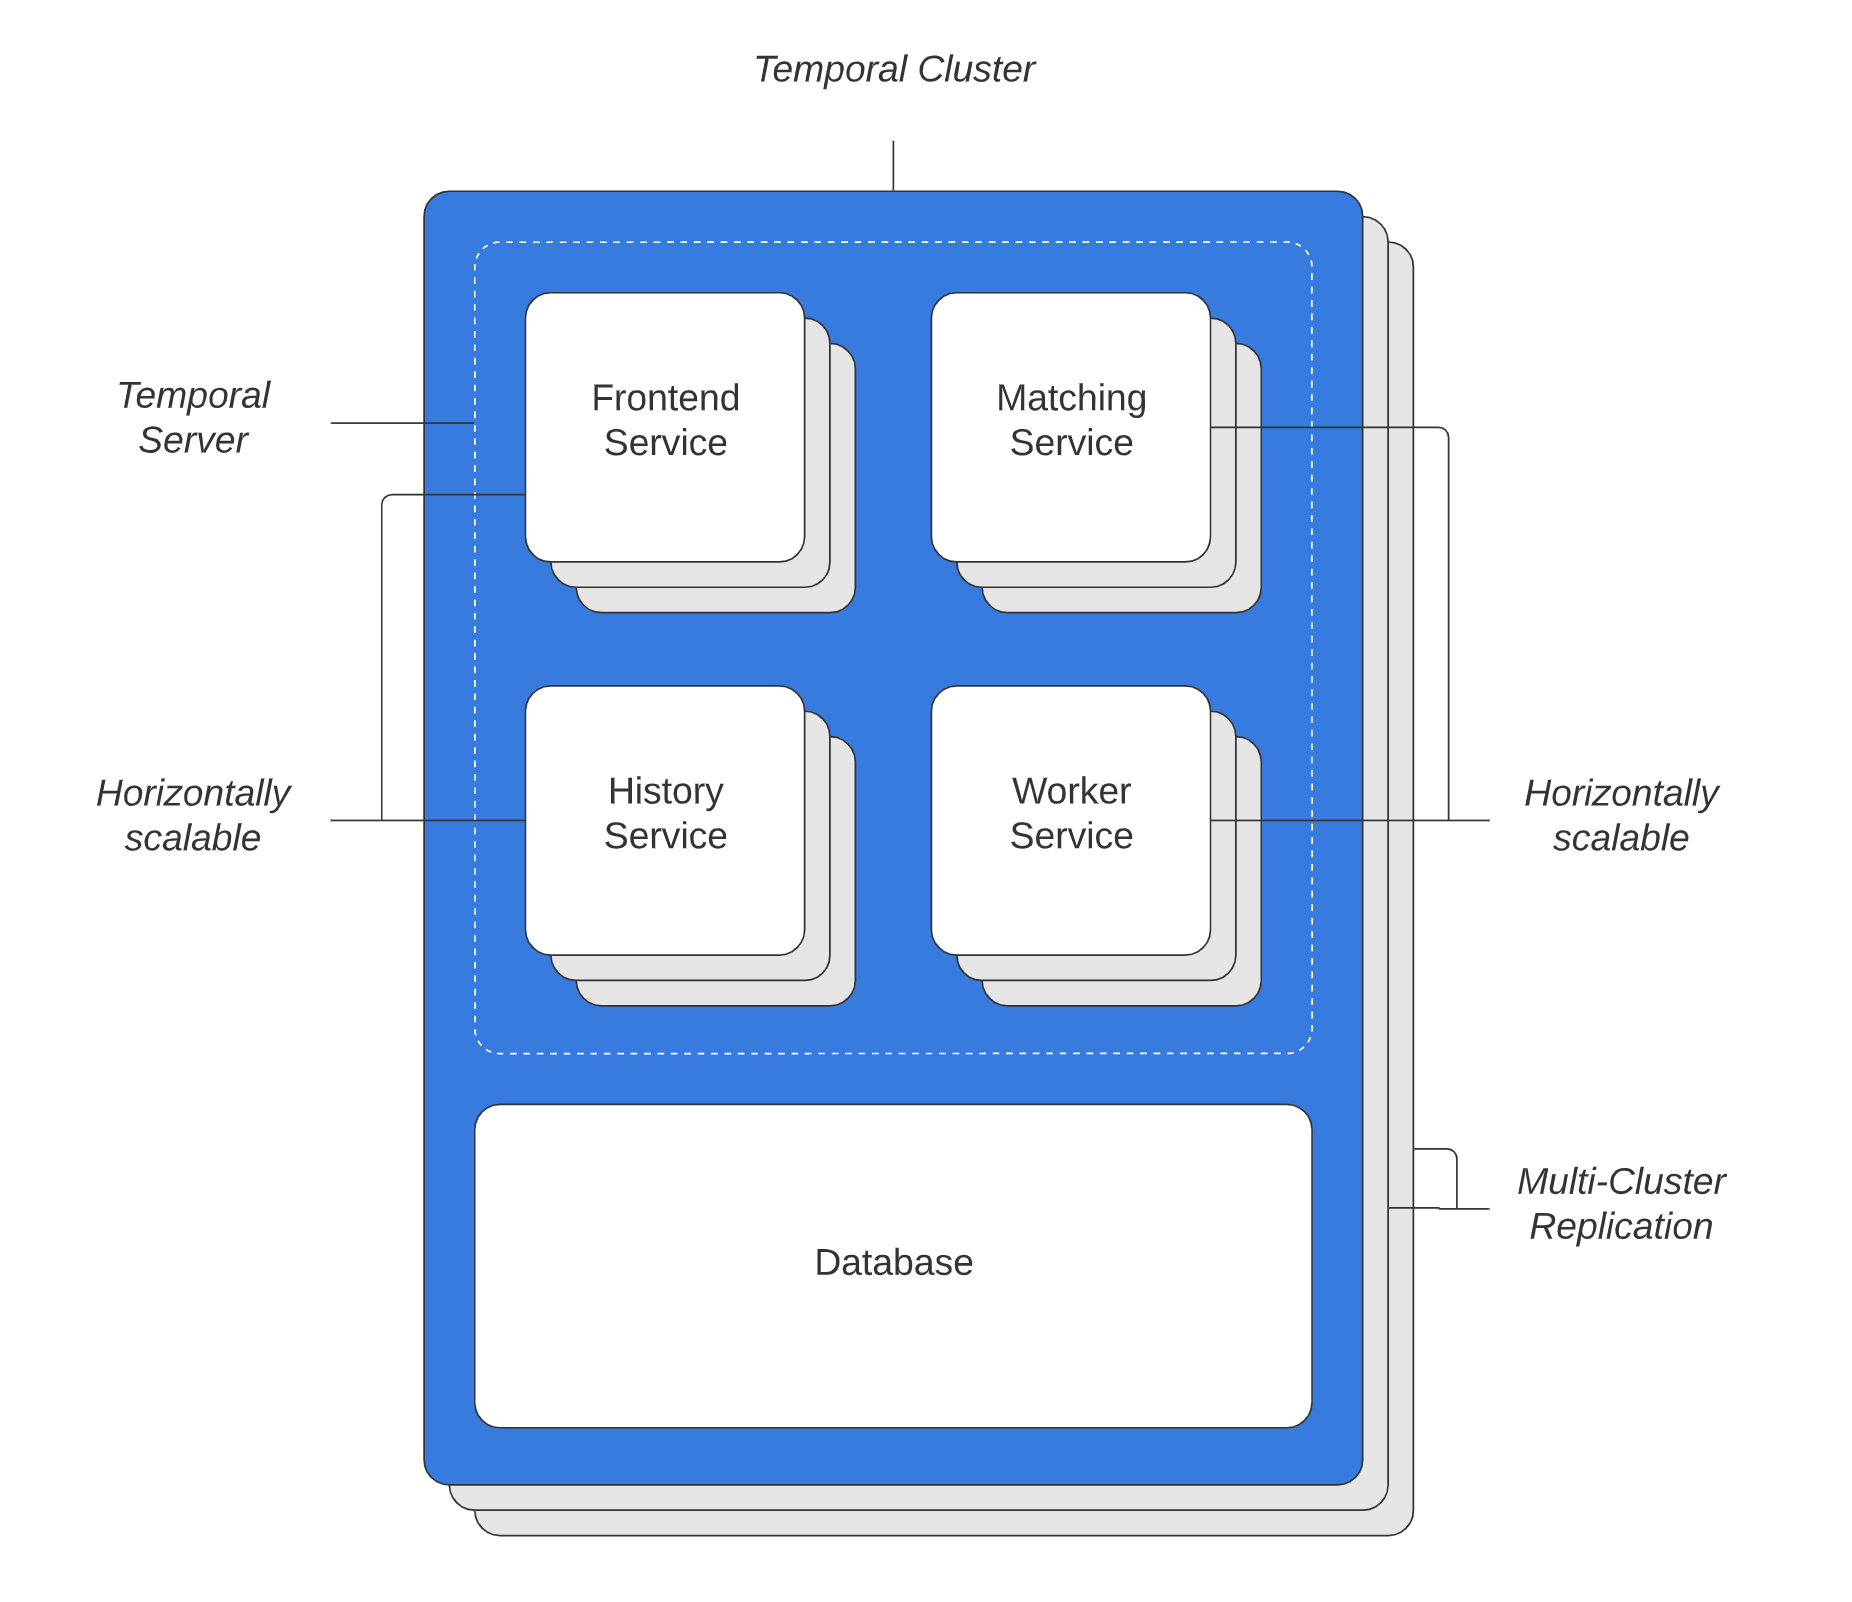 Temporal Cluster diagram